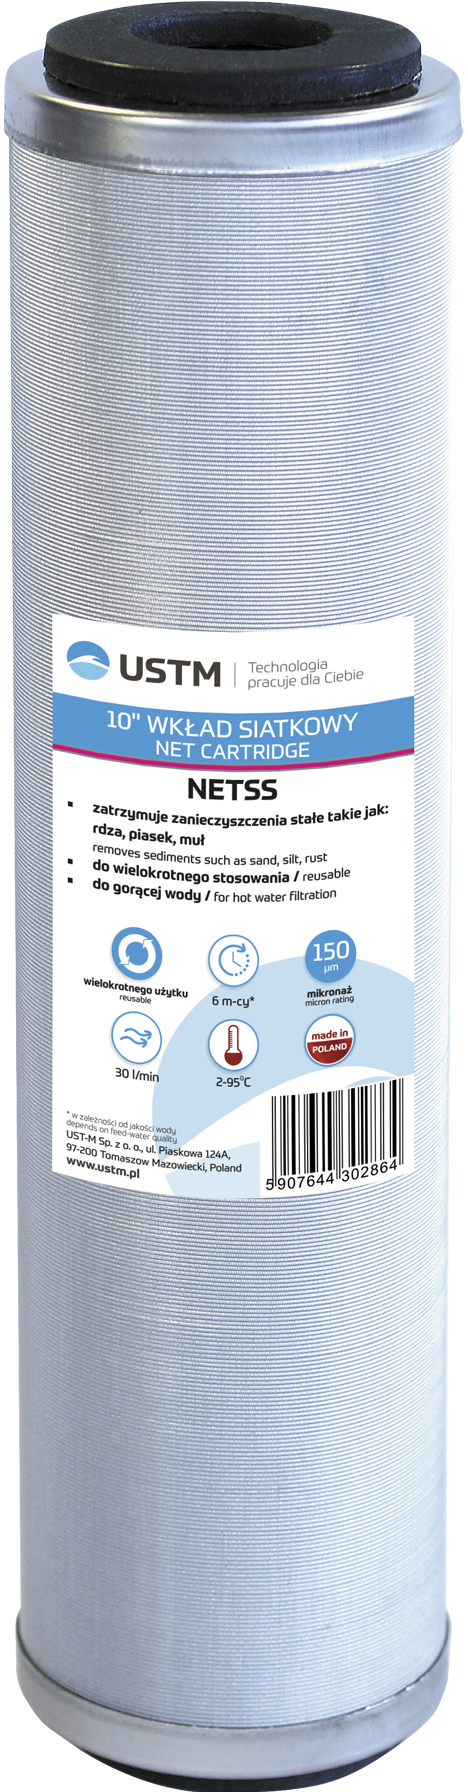 Характеристики картридж на 150 мкм USTM NETSS